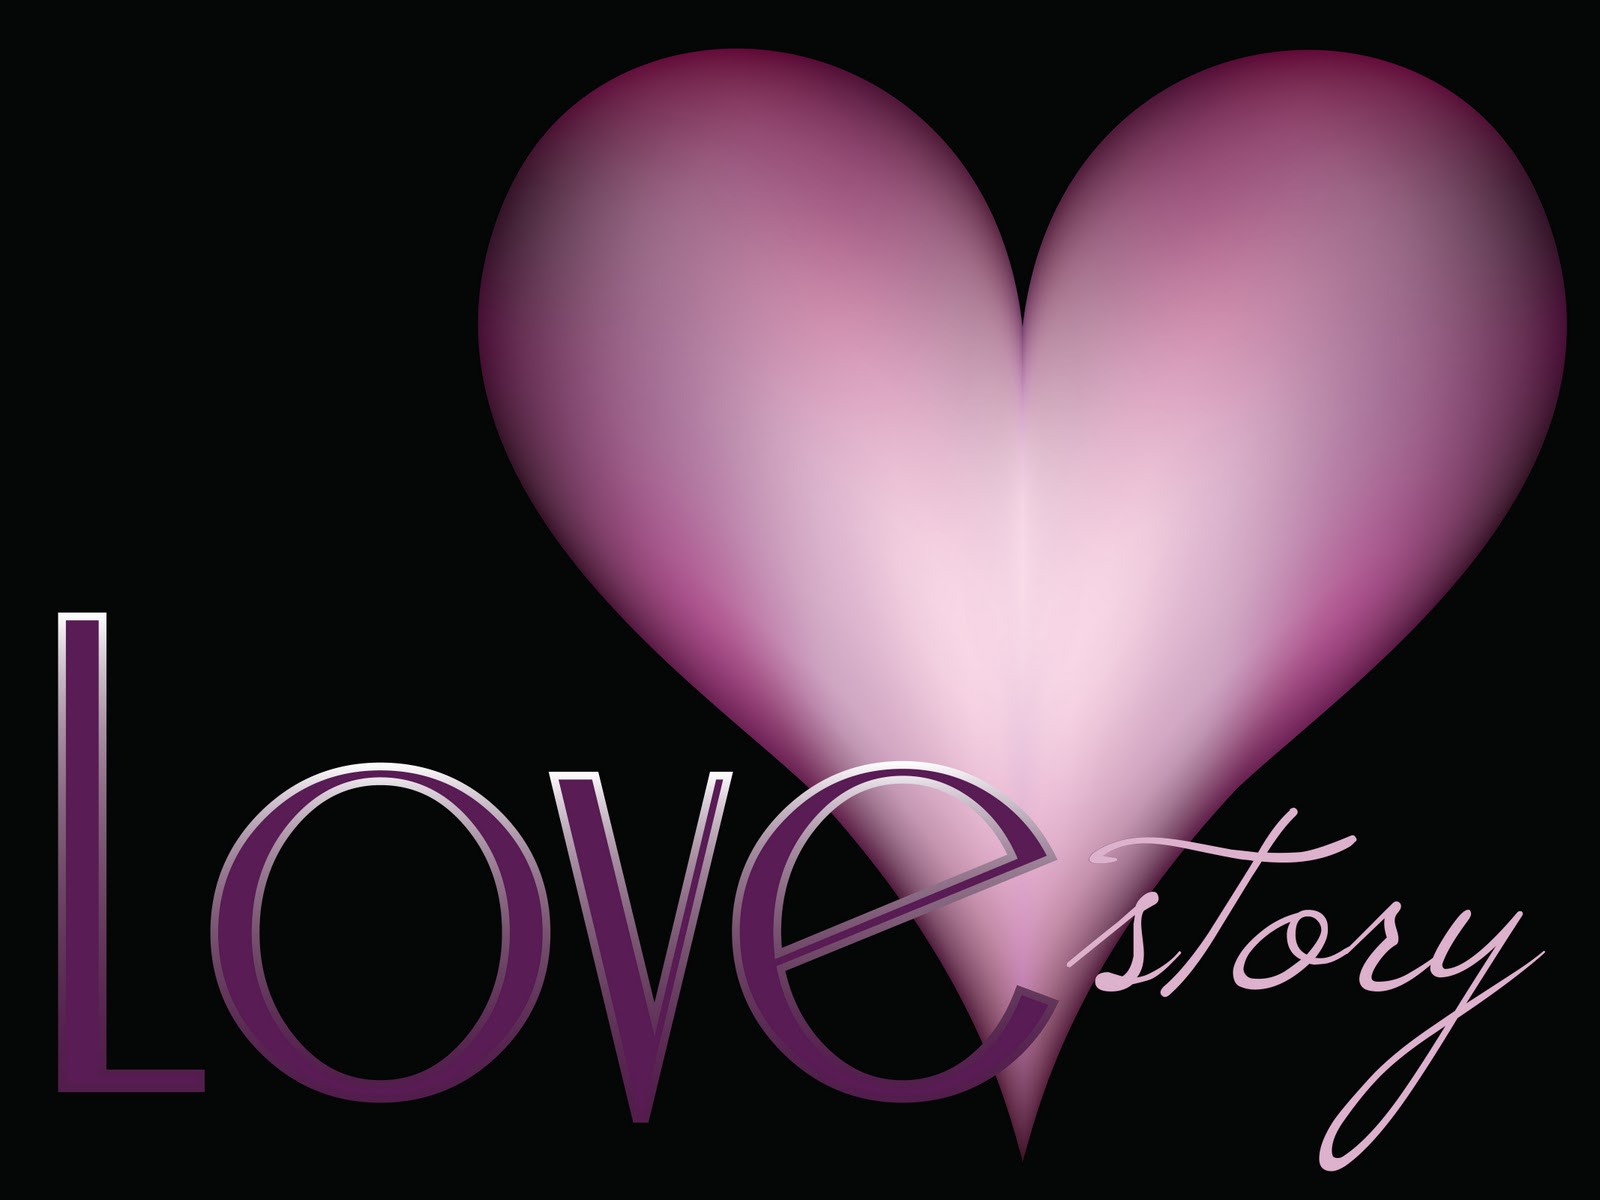 Koleksi Cerita Pendek Tentang Cinta Romantis Sedih Persahabatan